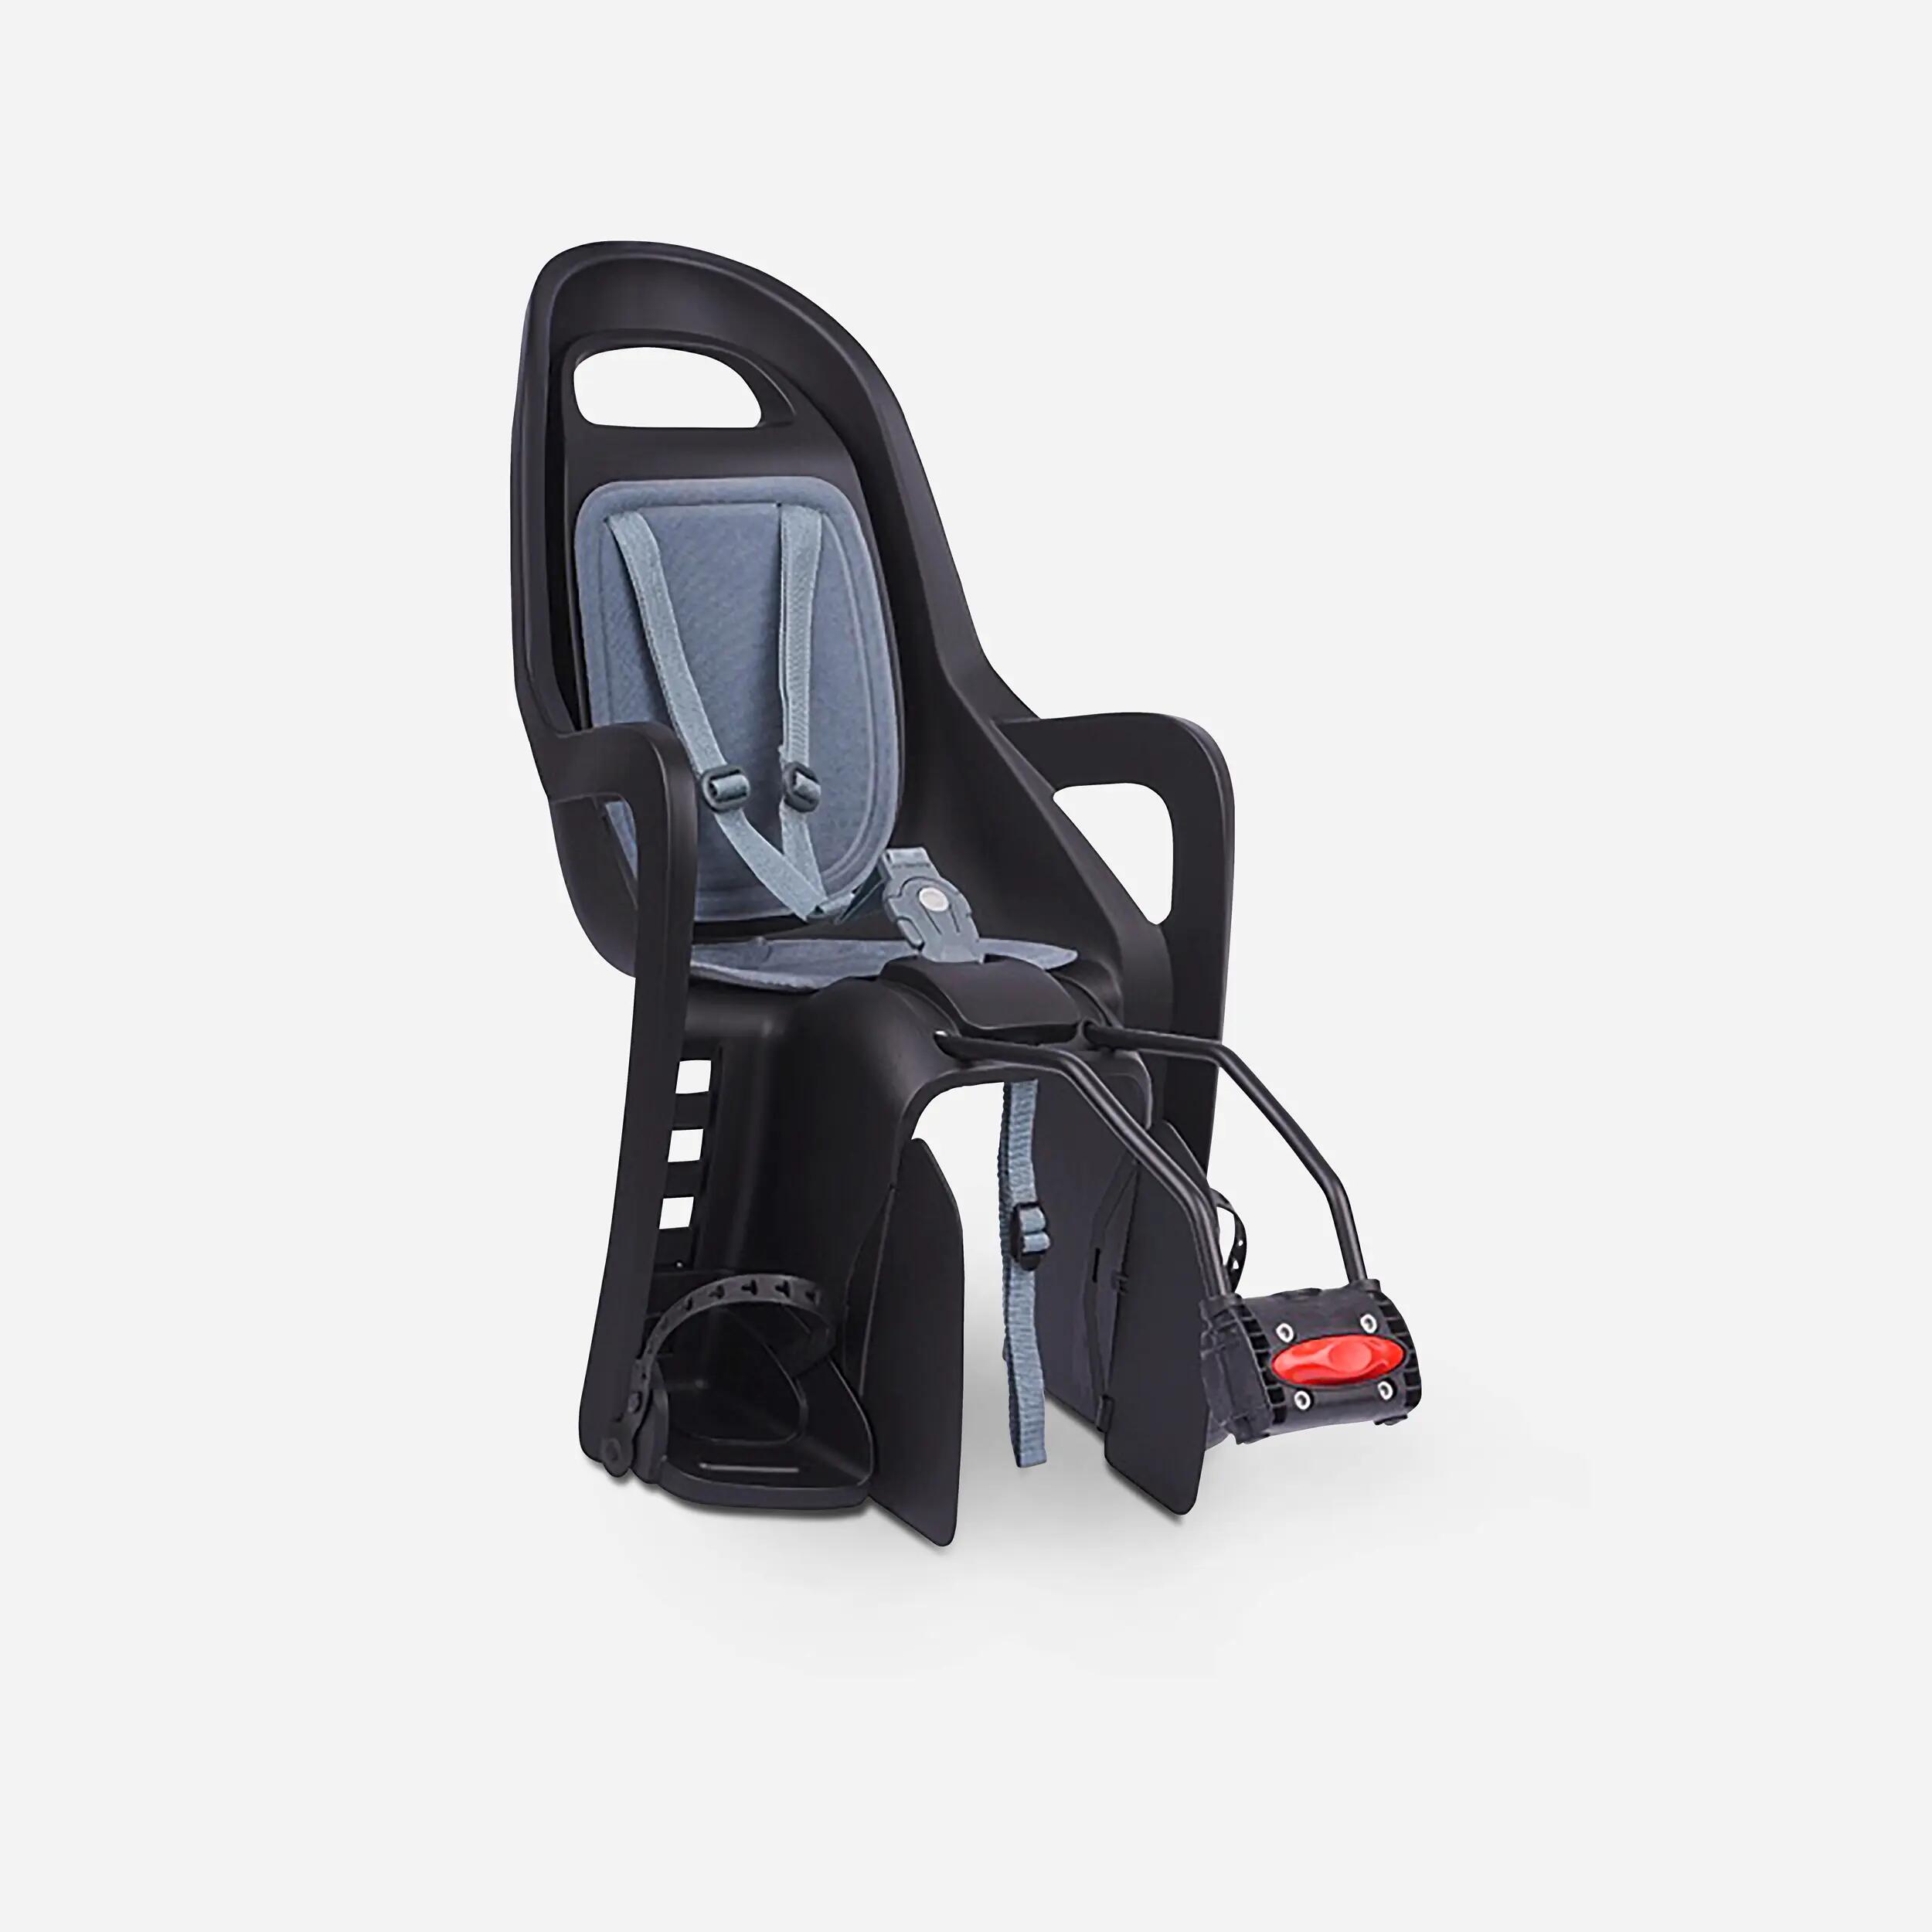 VTT ROCKRIDER ST 100 siège bébé compatible